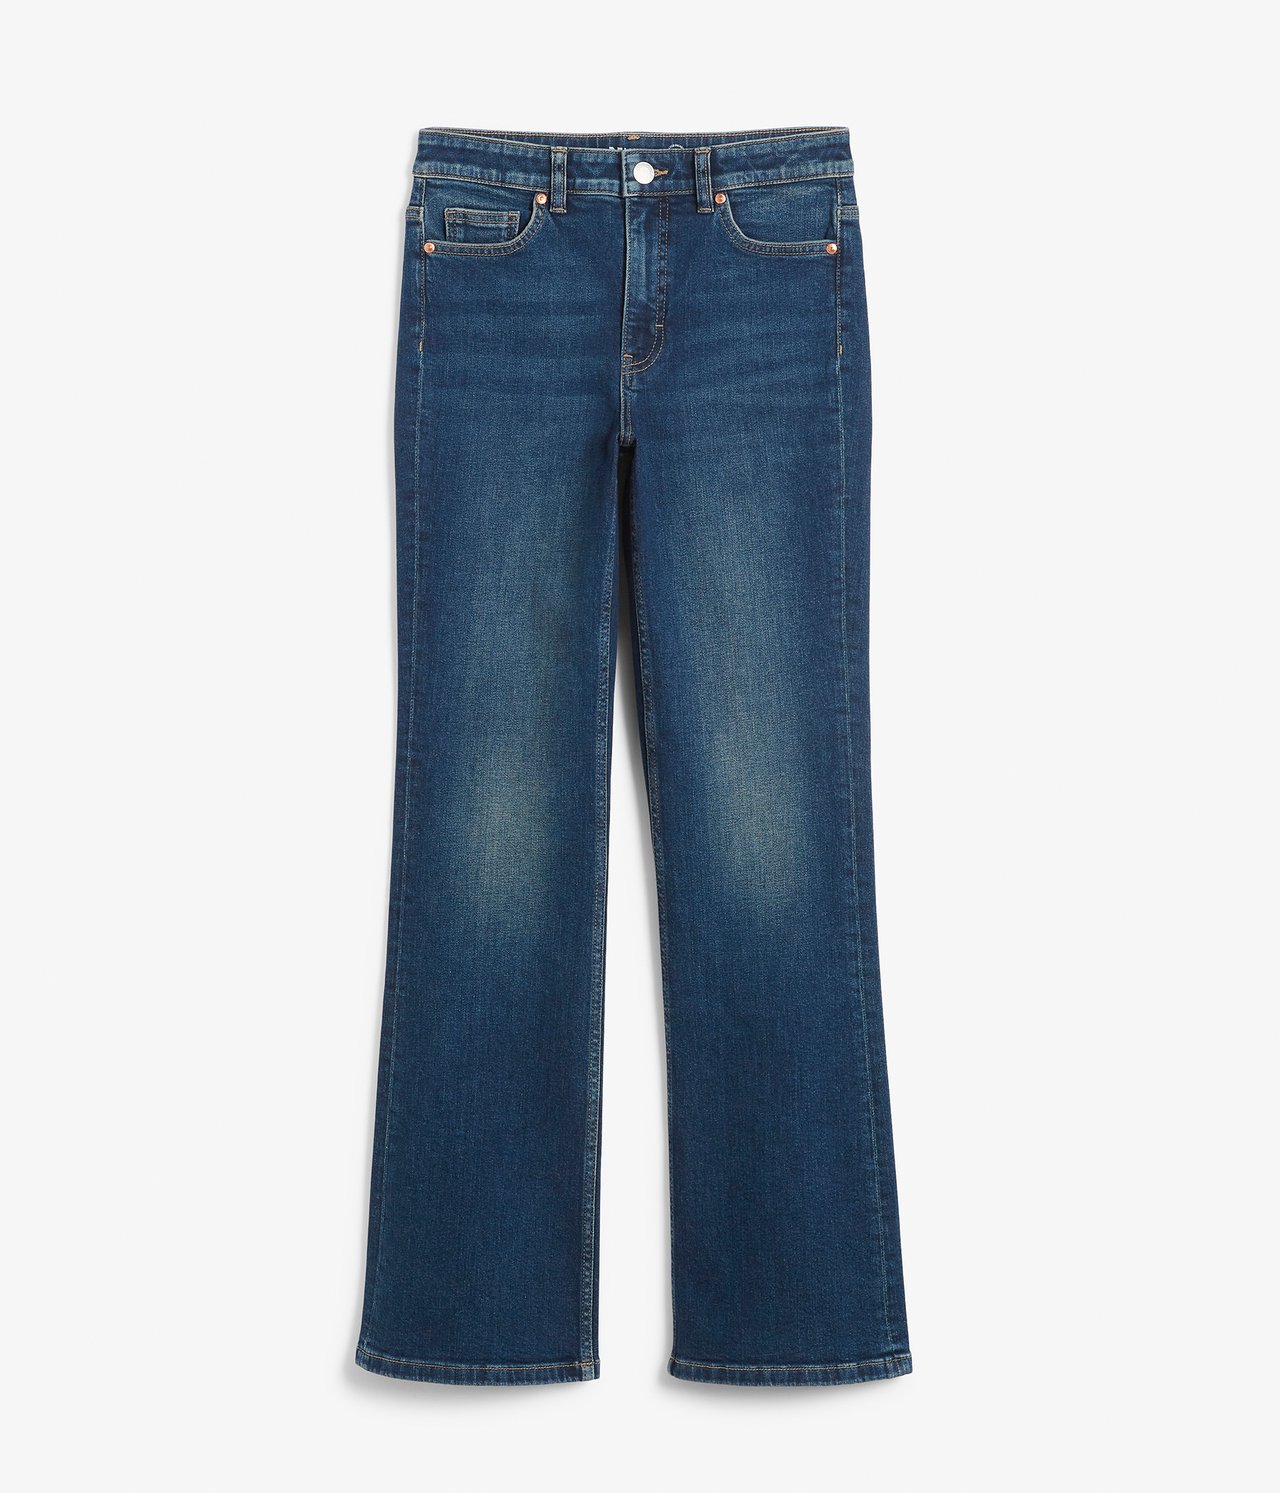 Flare jeans regular waist Mörk denim - null - 5